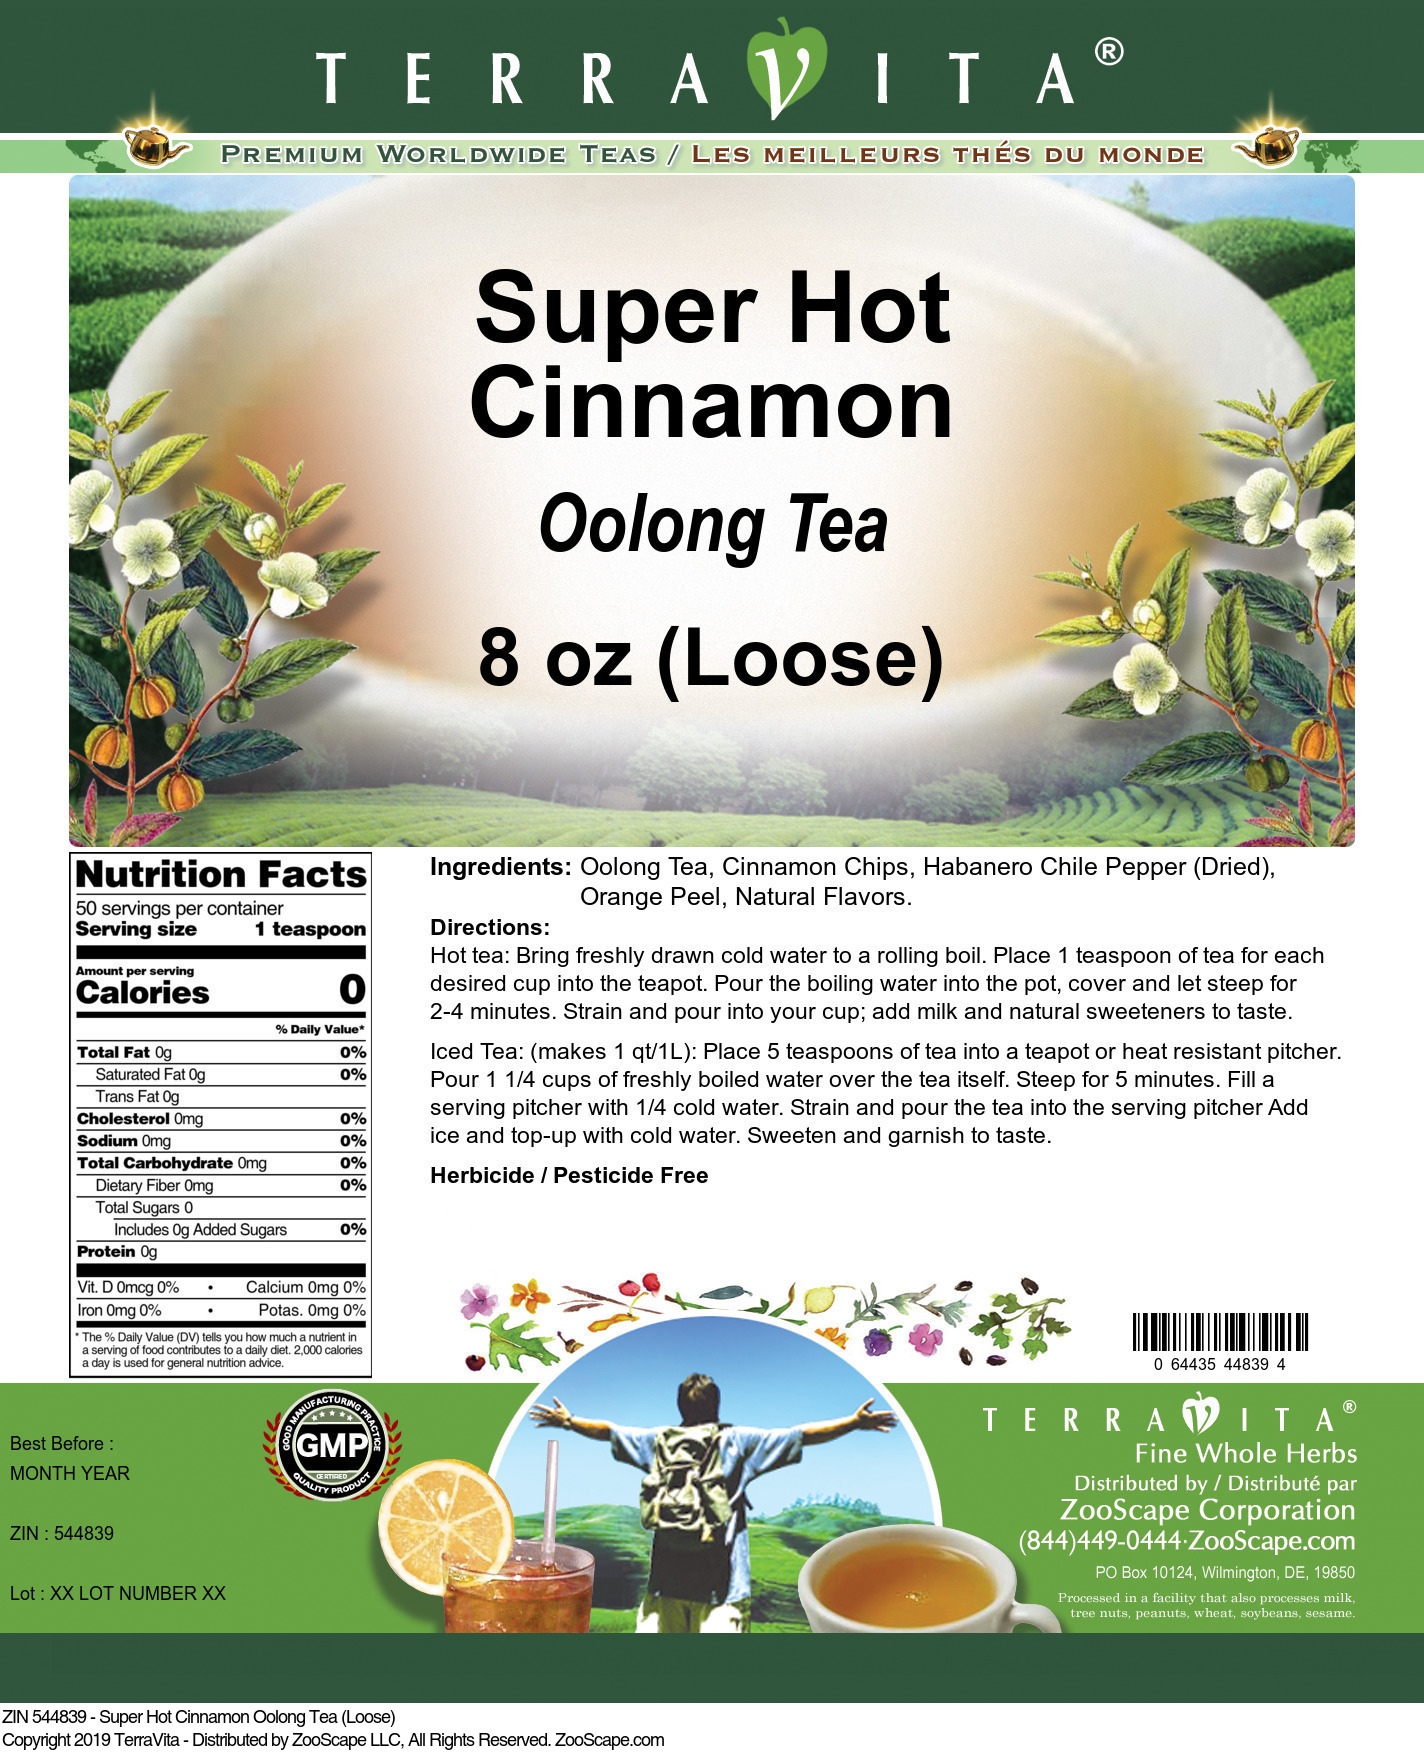 Super Hot Cinnamon Oolong Tea (Loose) - Label